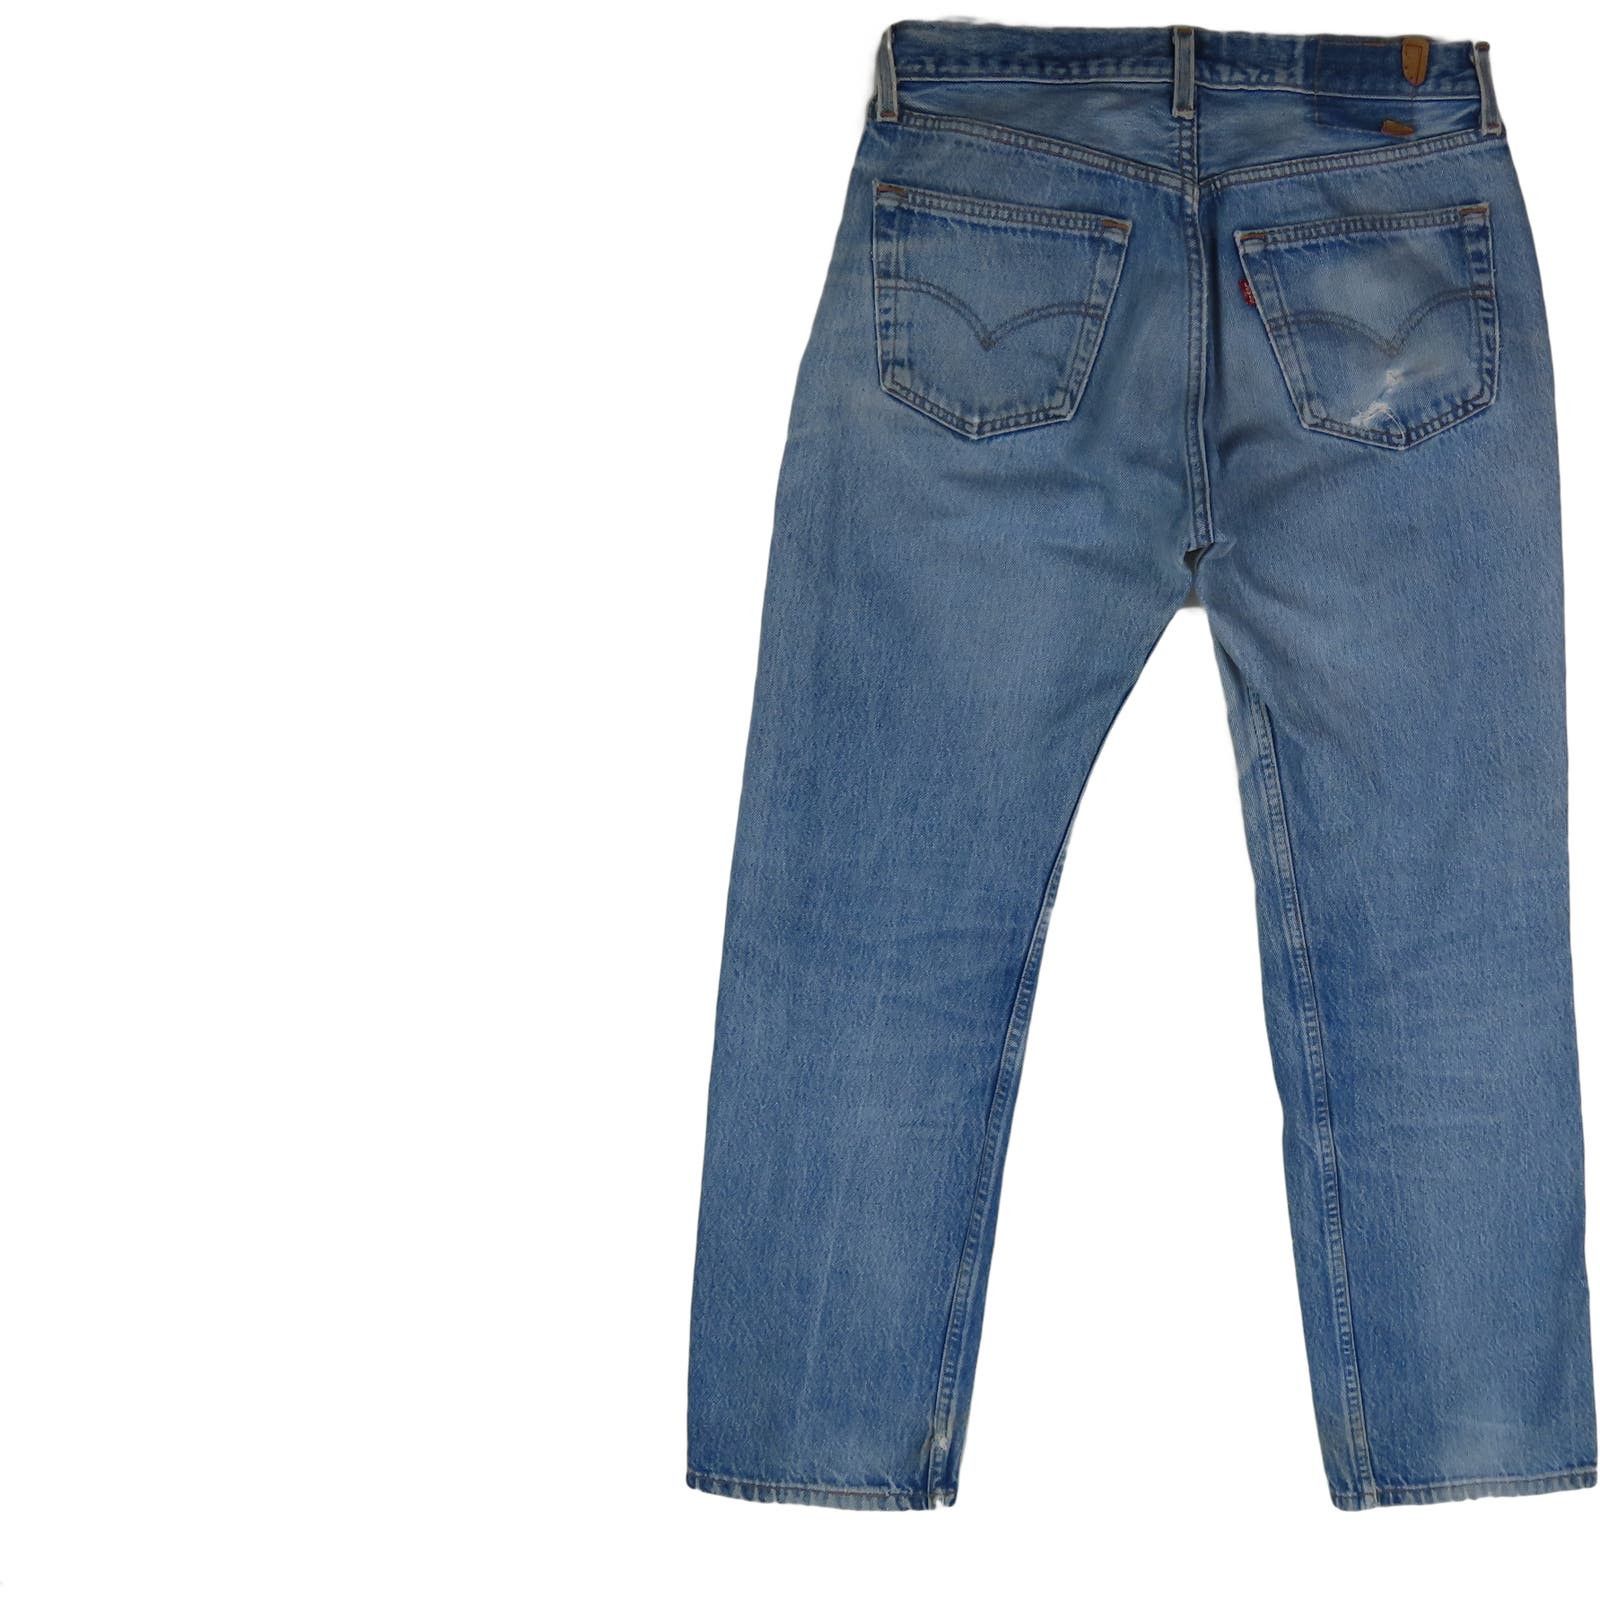 Levi's Vintage Levi's 501 High Waisted Denim Jeans 31 Size US 31 - 2 Preview